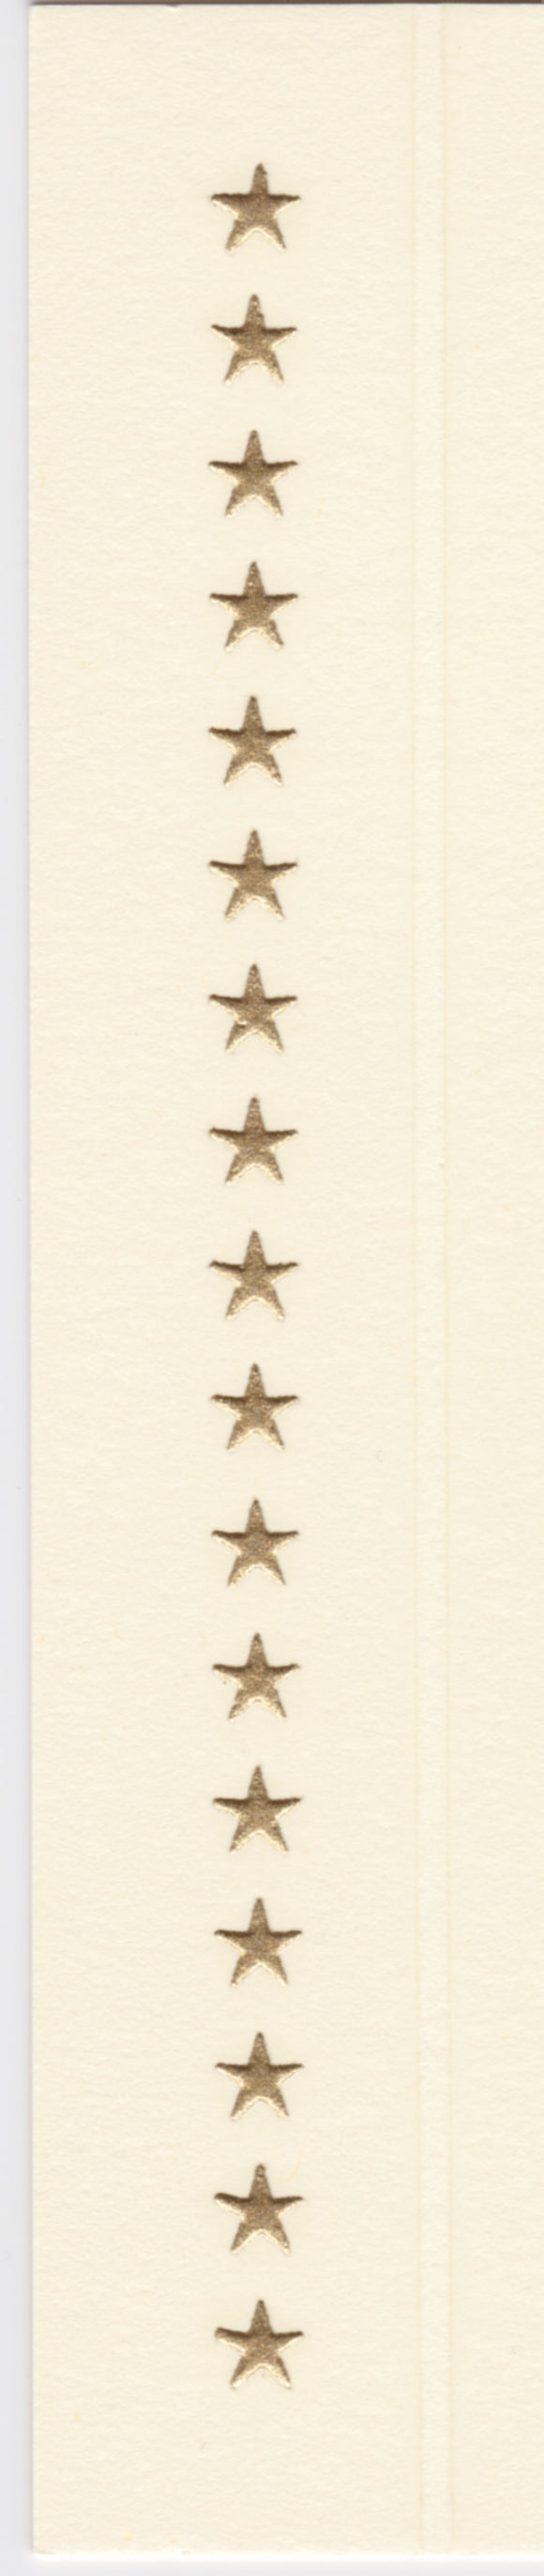 5 X 7 NOTECARD - ROW OF GOLD STARS